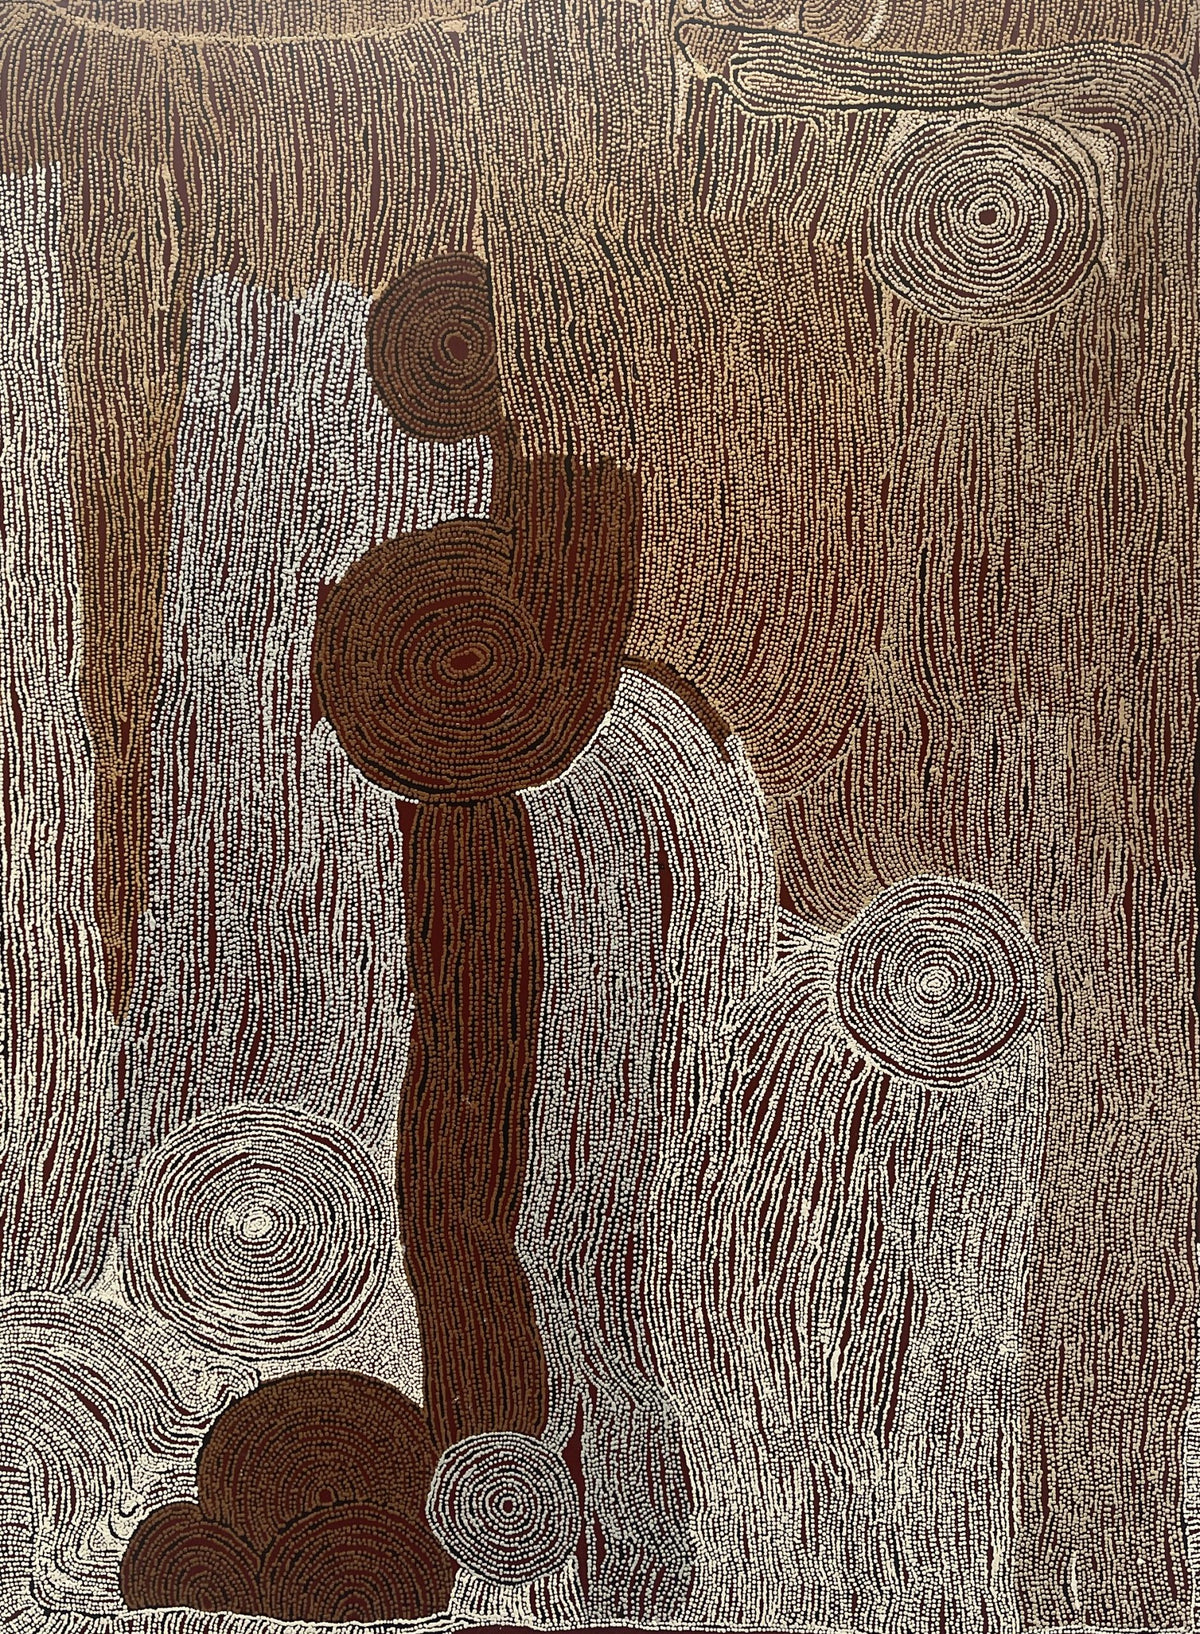 Ester Giles Nampitjinpa Aboriginal Artist Australia